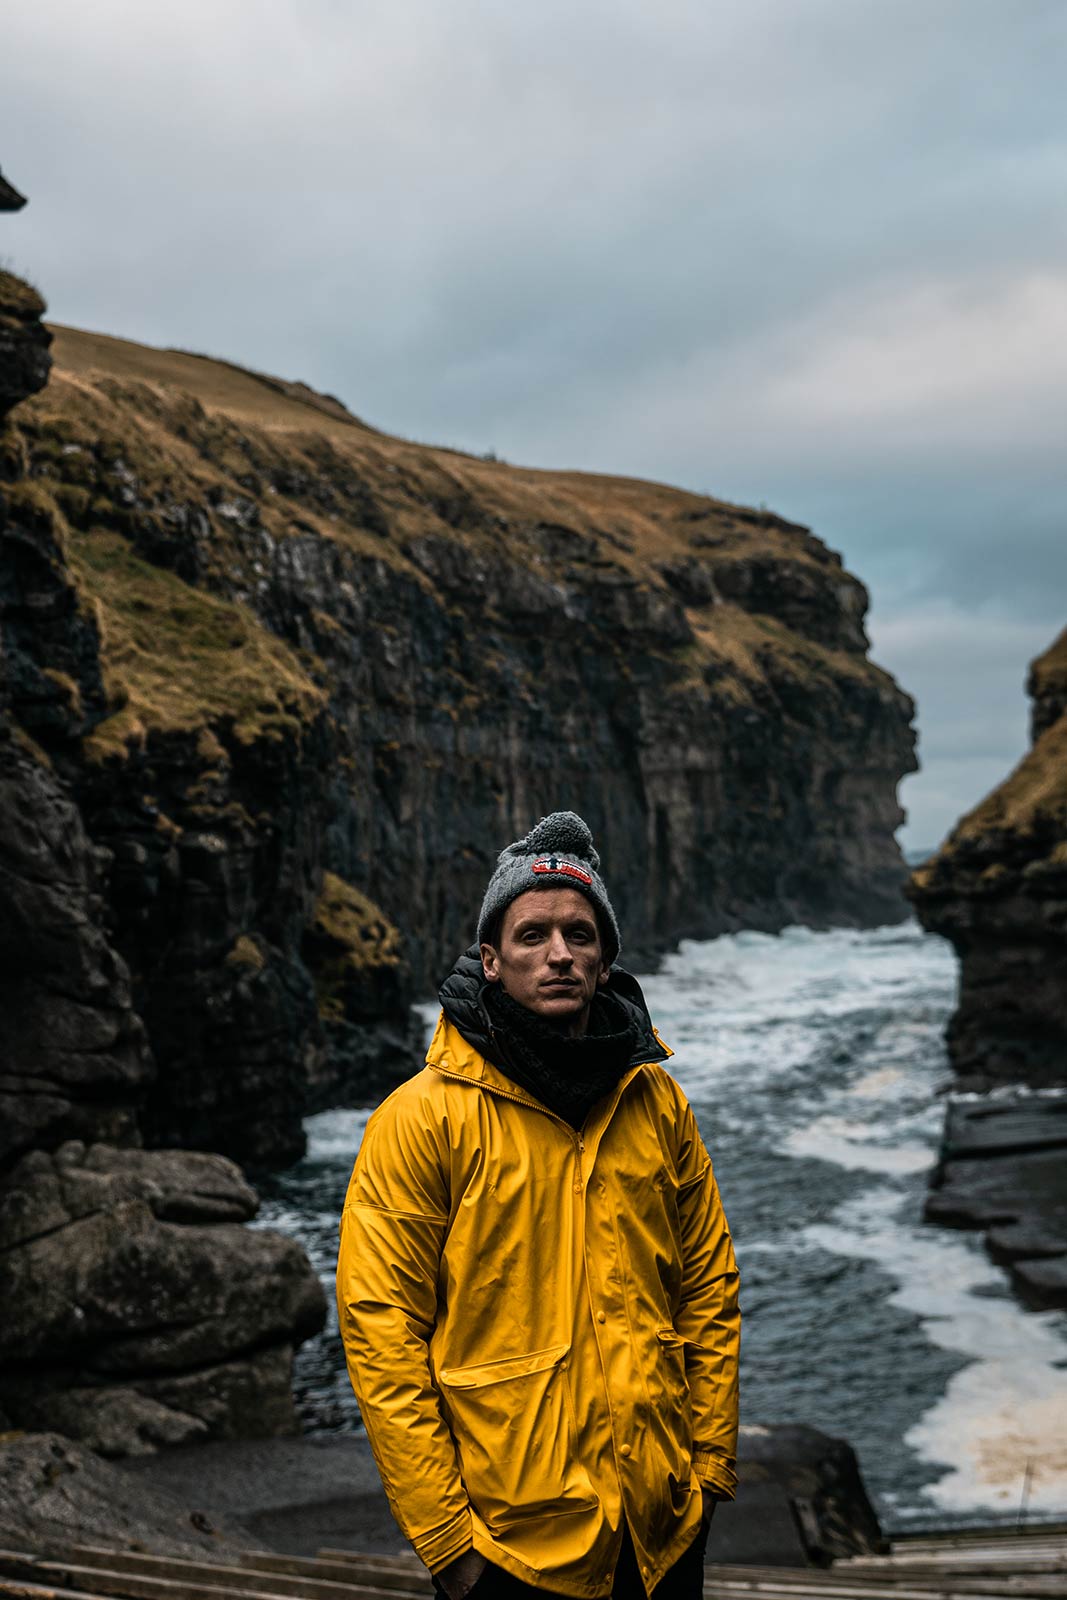 David Simpson at Gjogv in Faroe Islands. Full guide & itinerary for the Faroe Islands